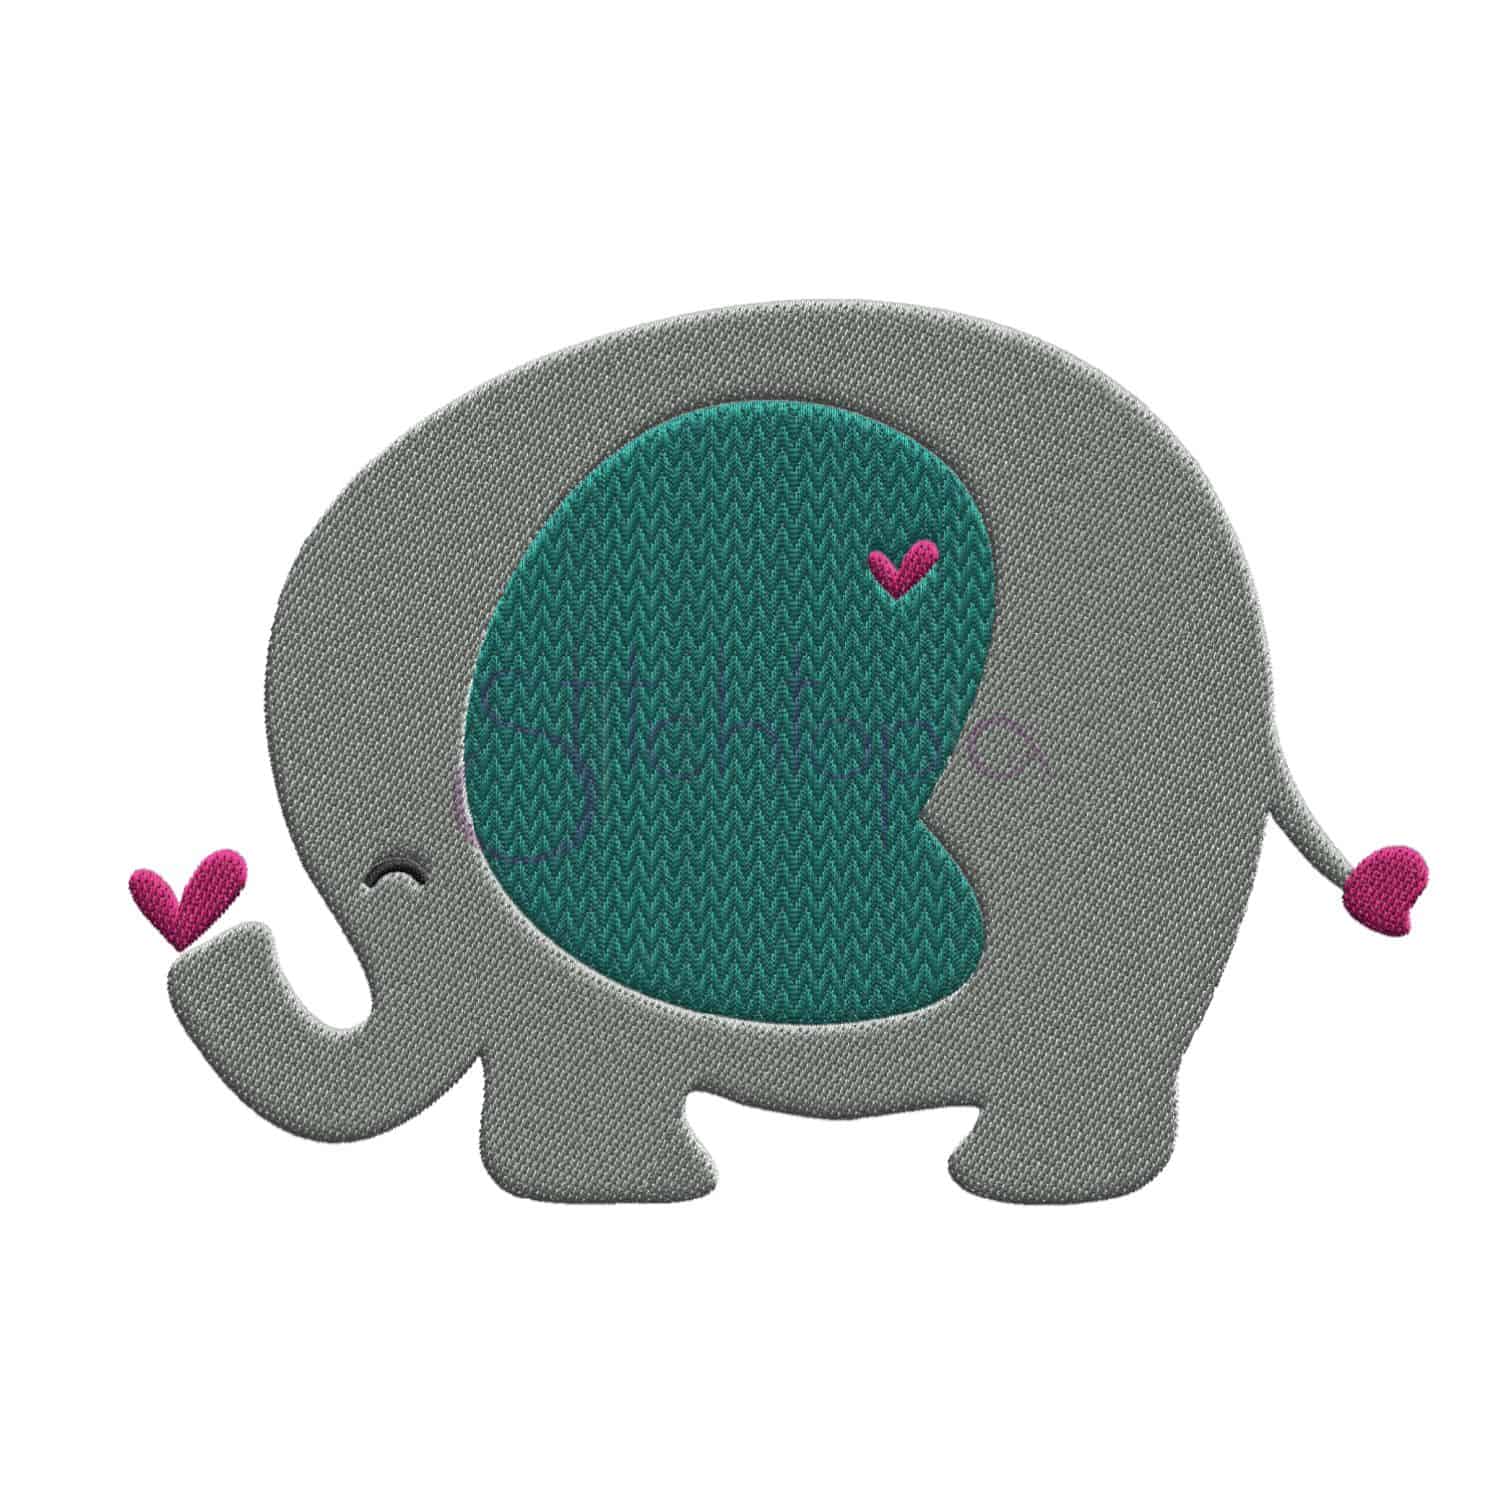 Elephant Embroidery Design Stitchtopia